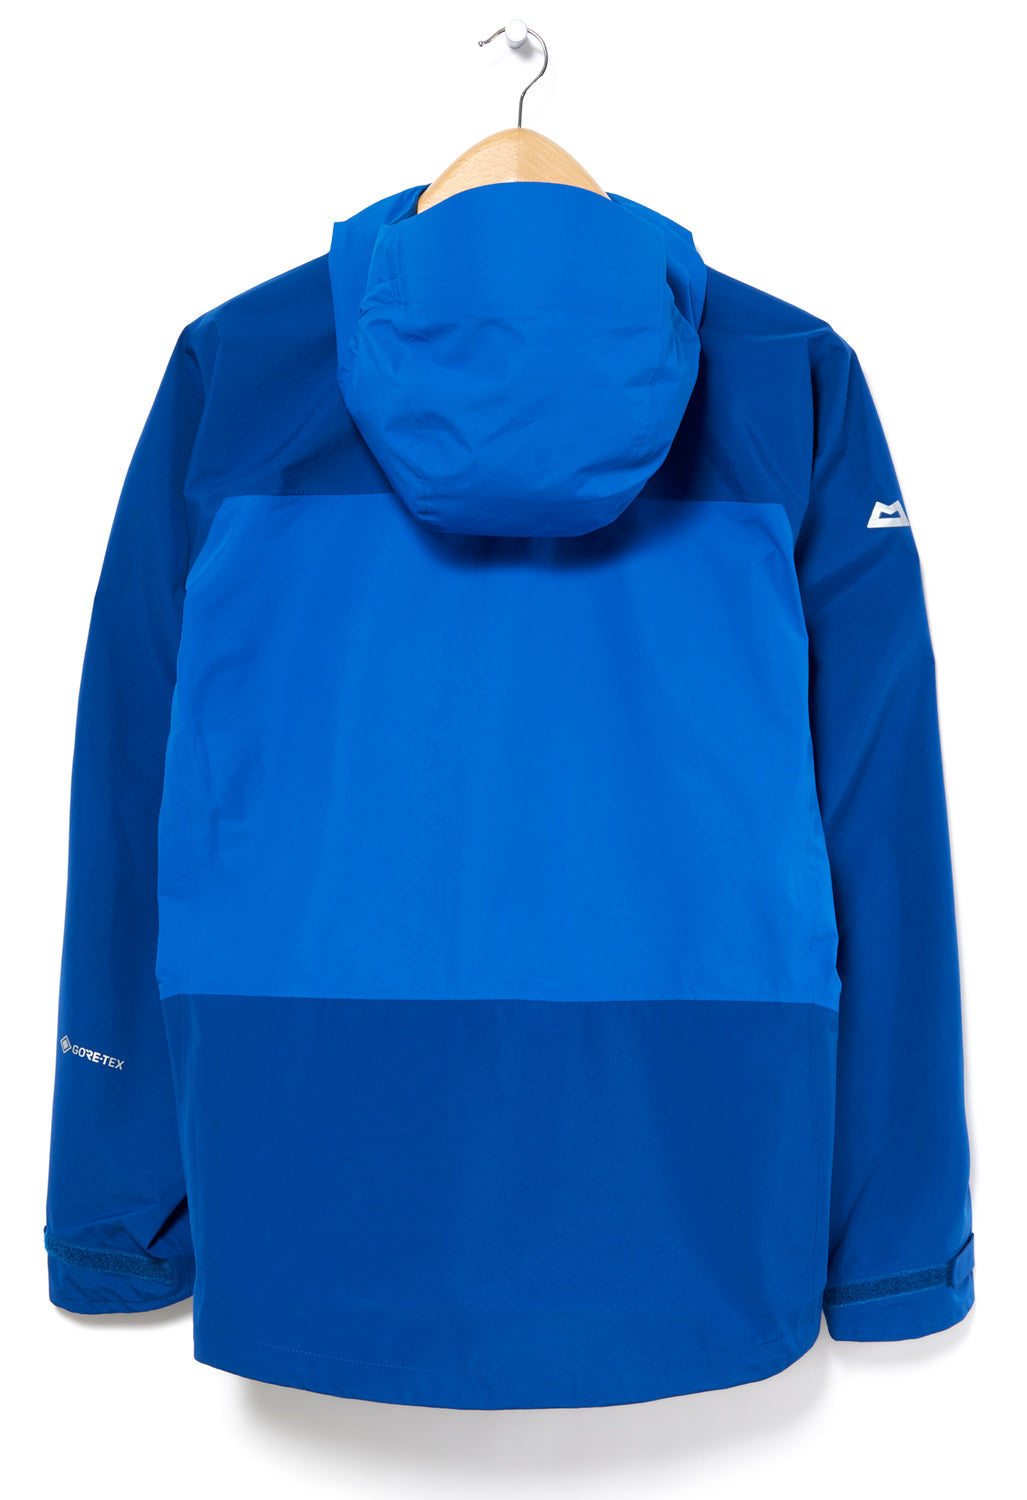 Mountain Equipment Saltoro GORE-TEX Paclite Men's Jacket - Lapis Blue